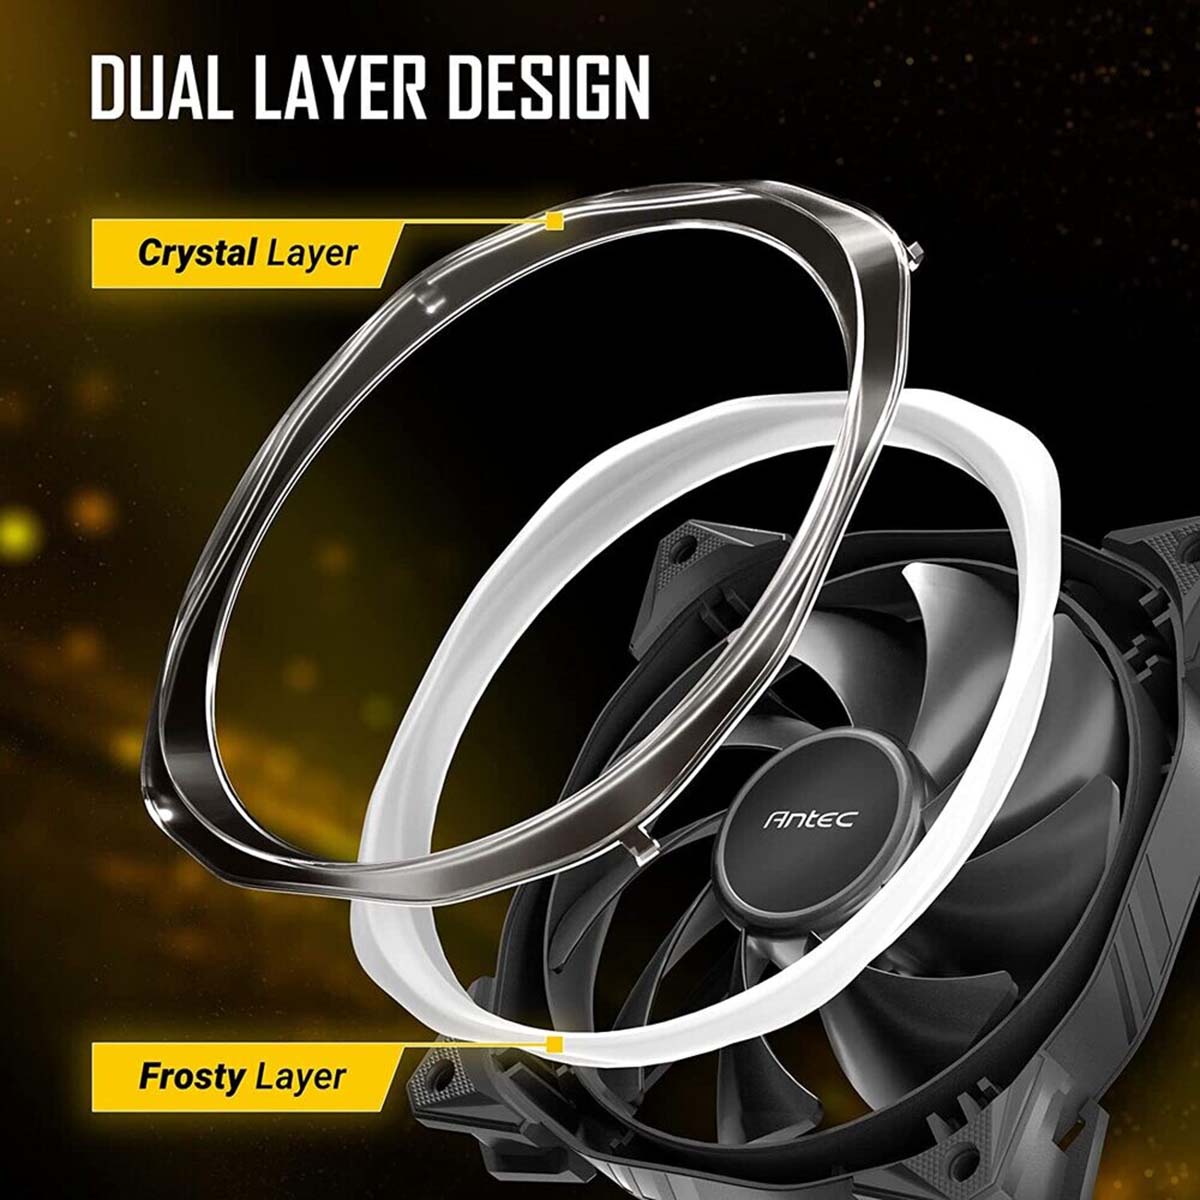 Dual Layer Design